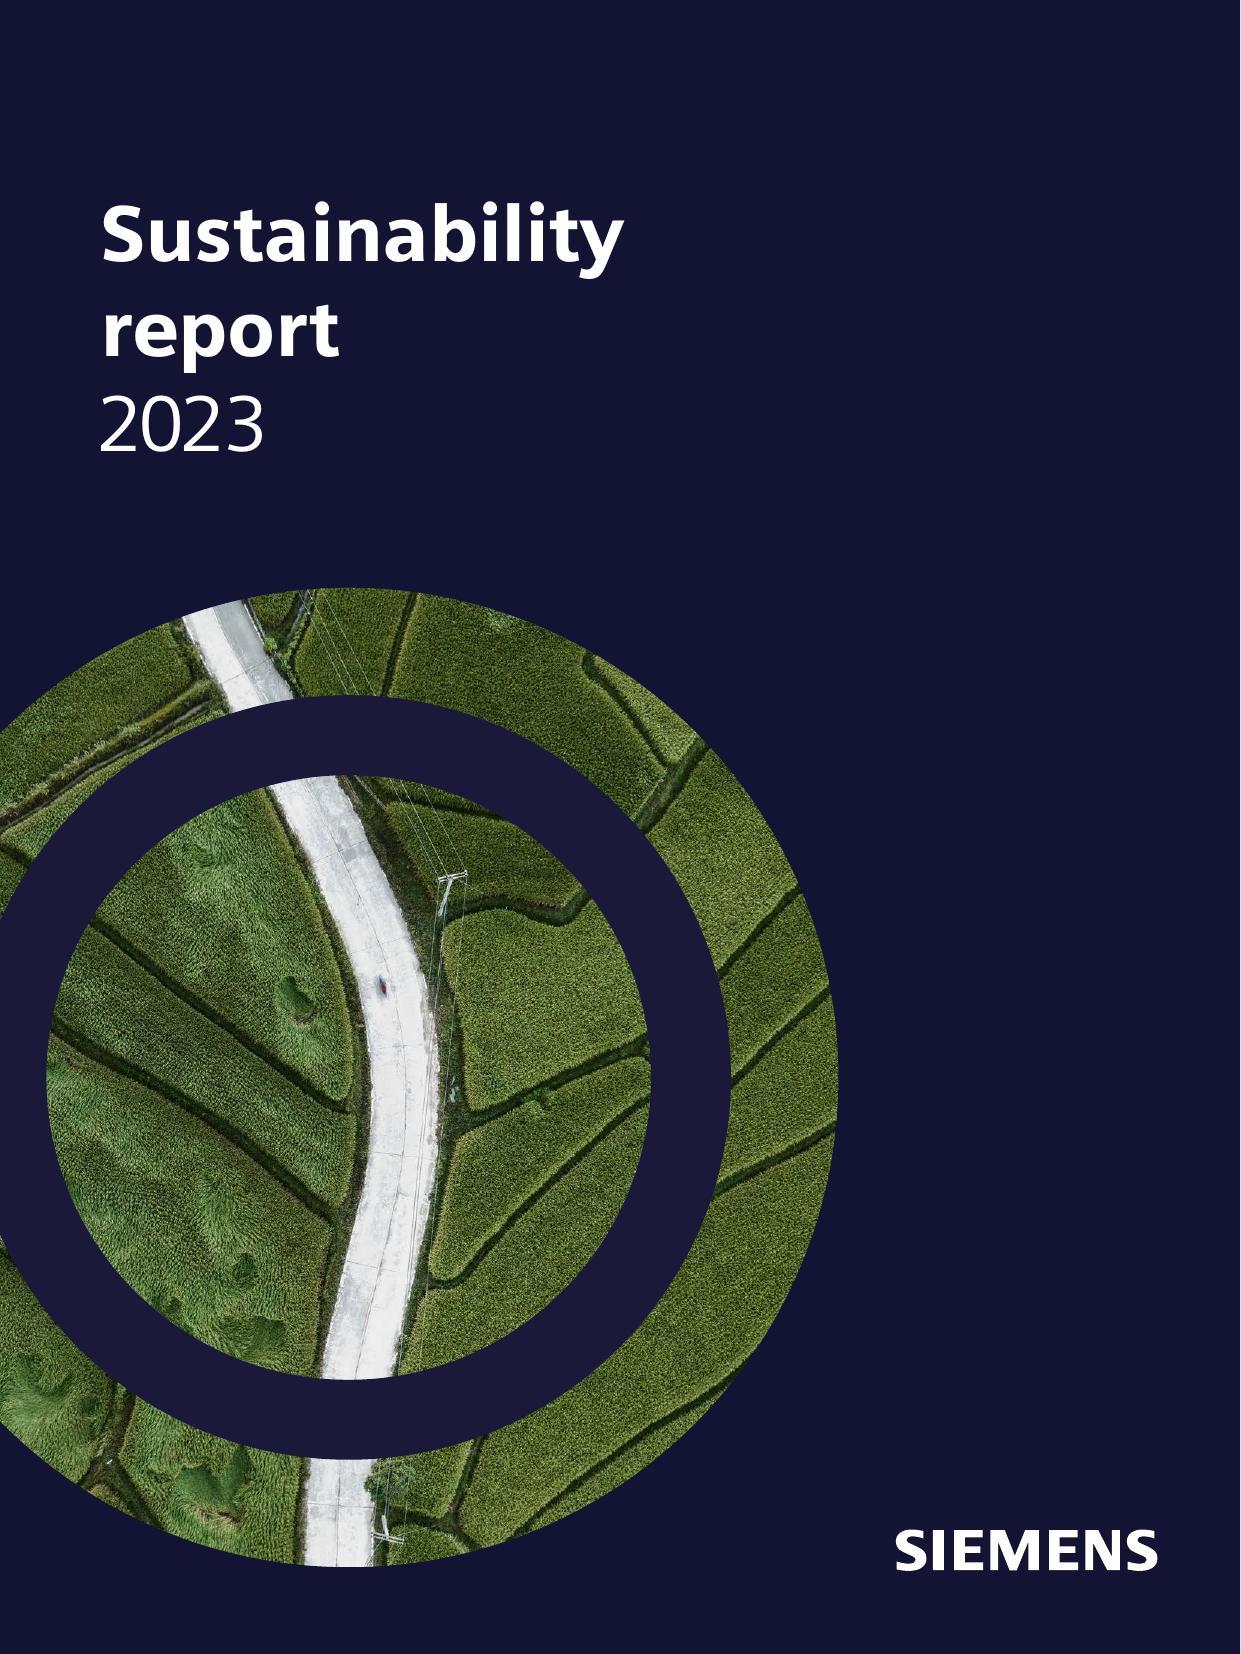 siemens-sustainability-report-2023.pdf